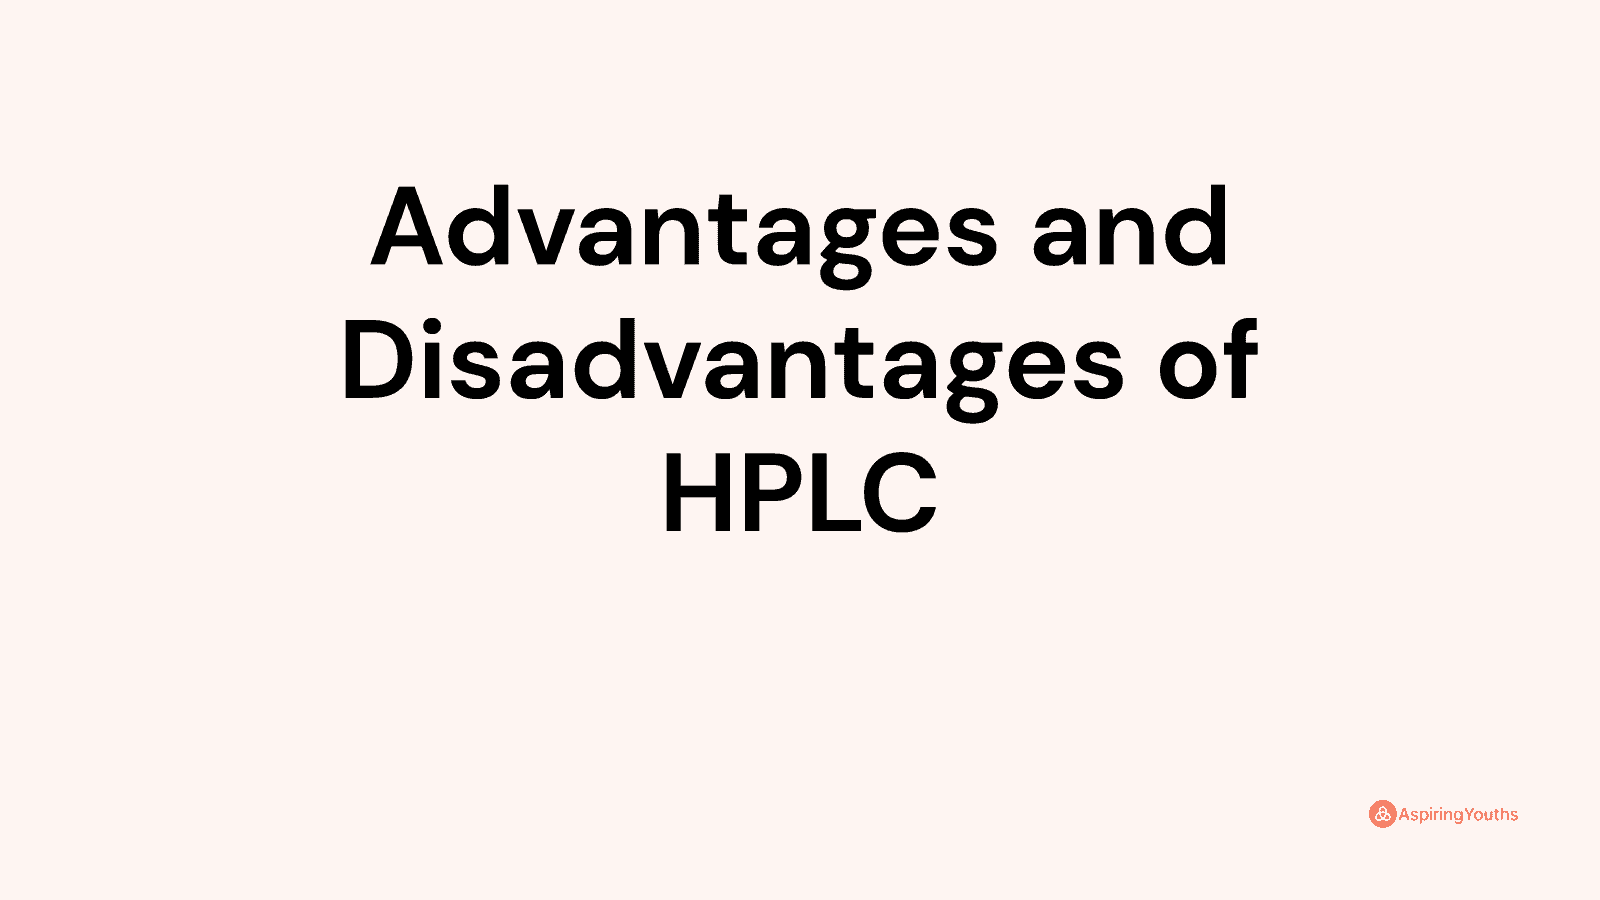 Advantages and disadvantages of HPLC